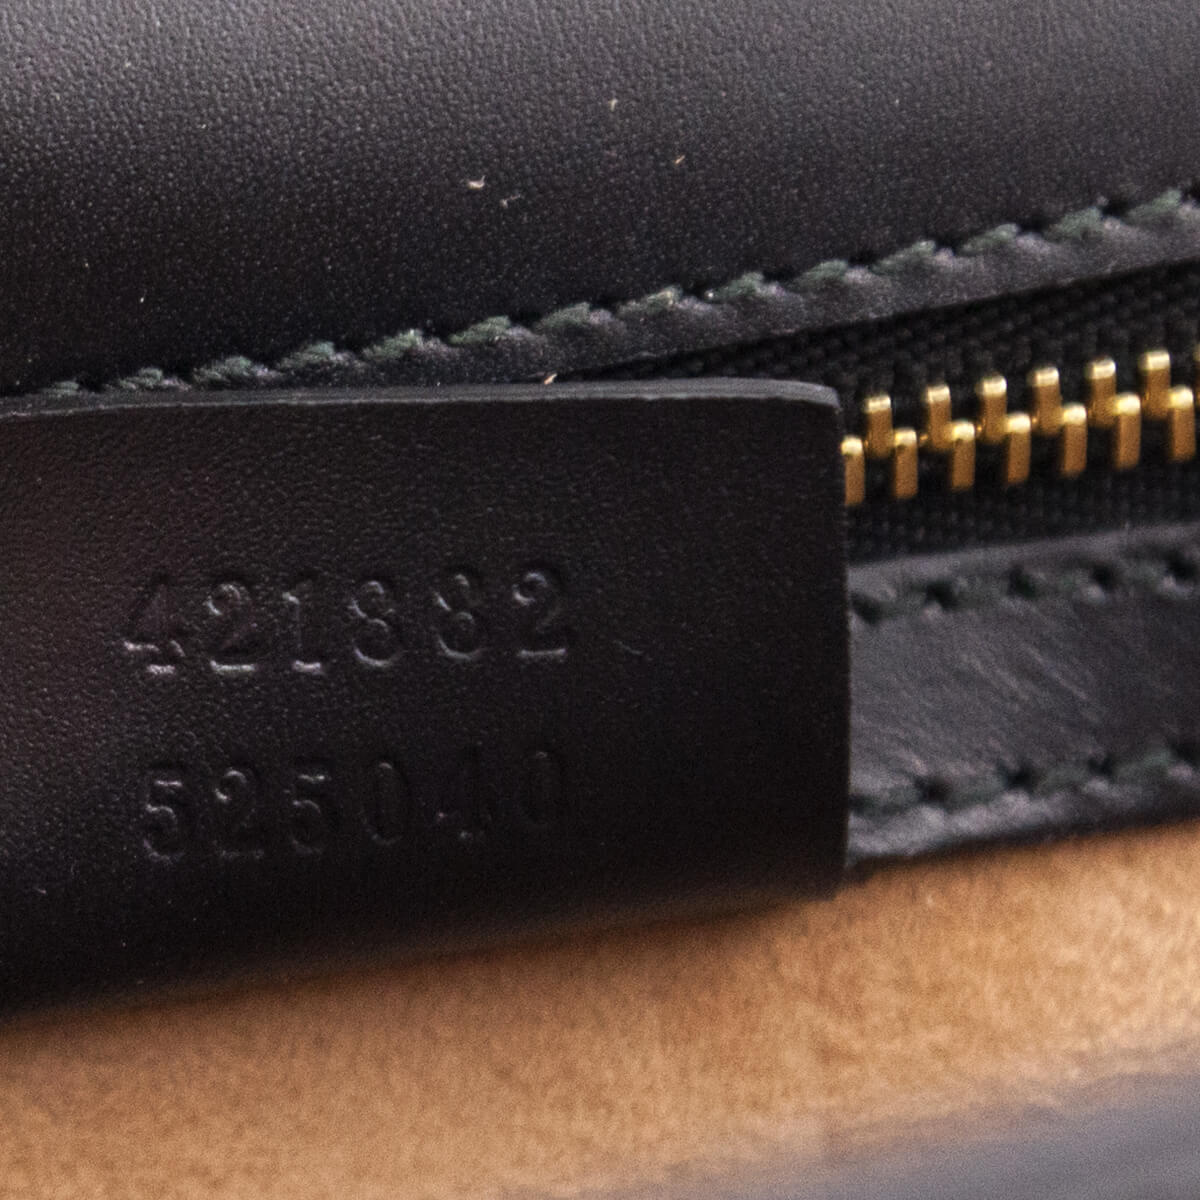 Gucci Black Calfskin Small Sylvie Shoulder Bag - Love that Bag etc - Preowned Authentic Designer Handbags & Preloved Fashions